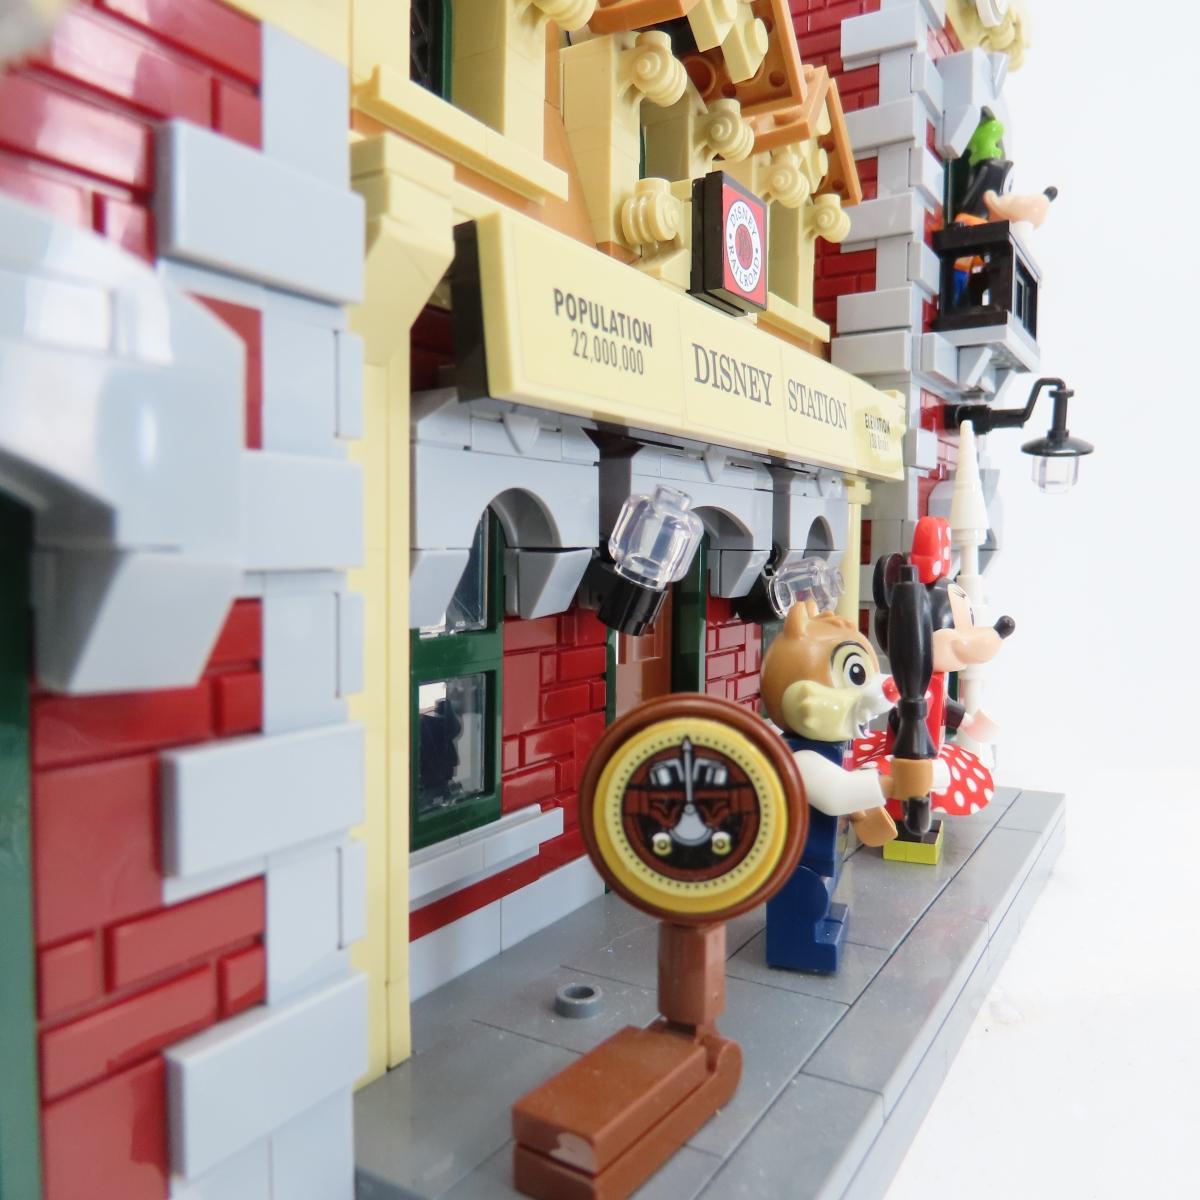 Lego Disney Train & station assembled